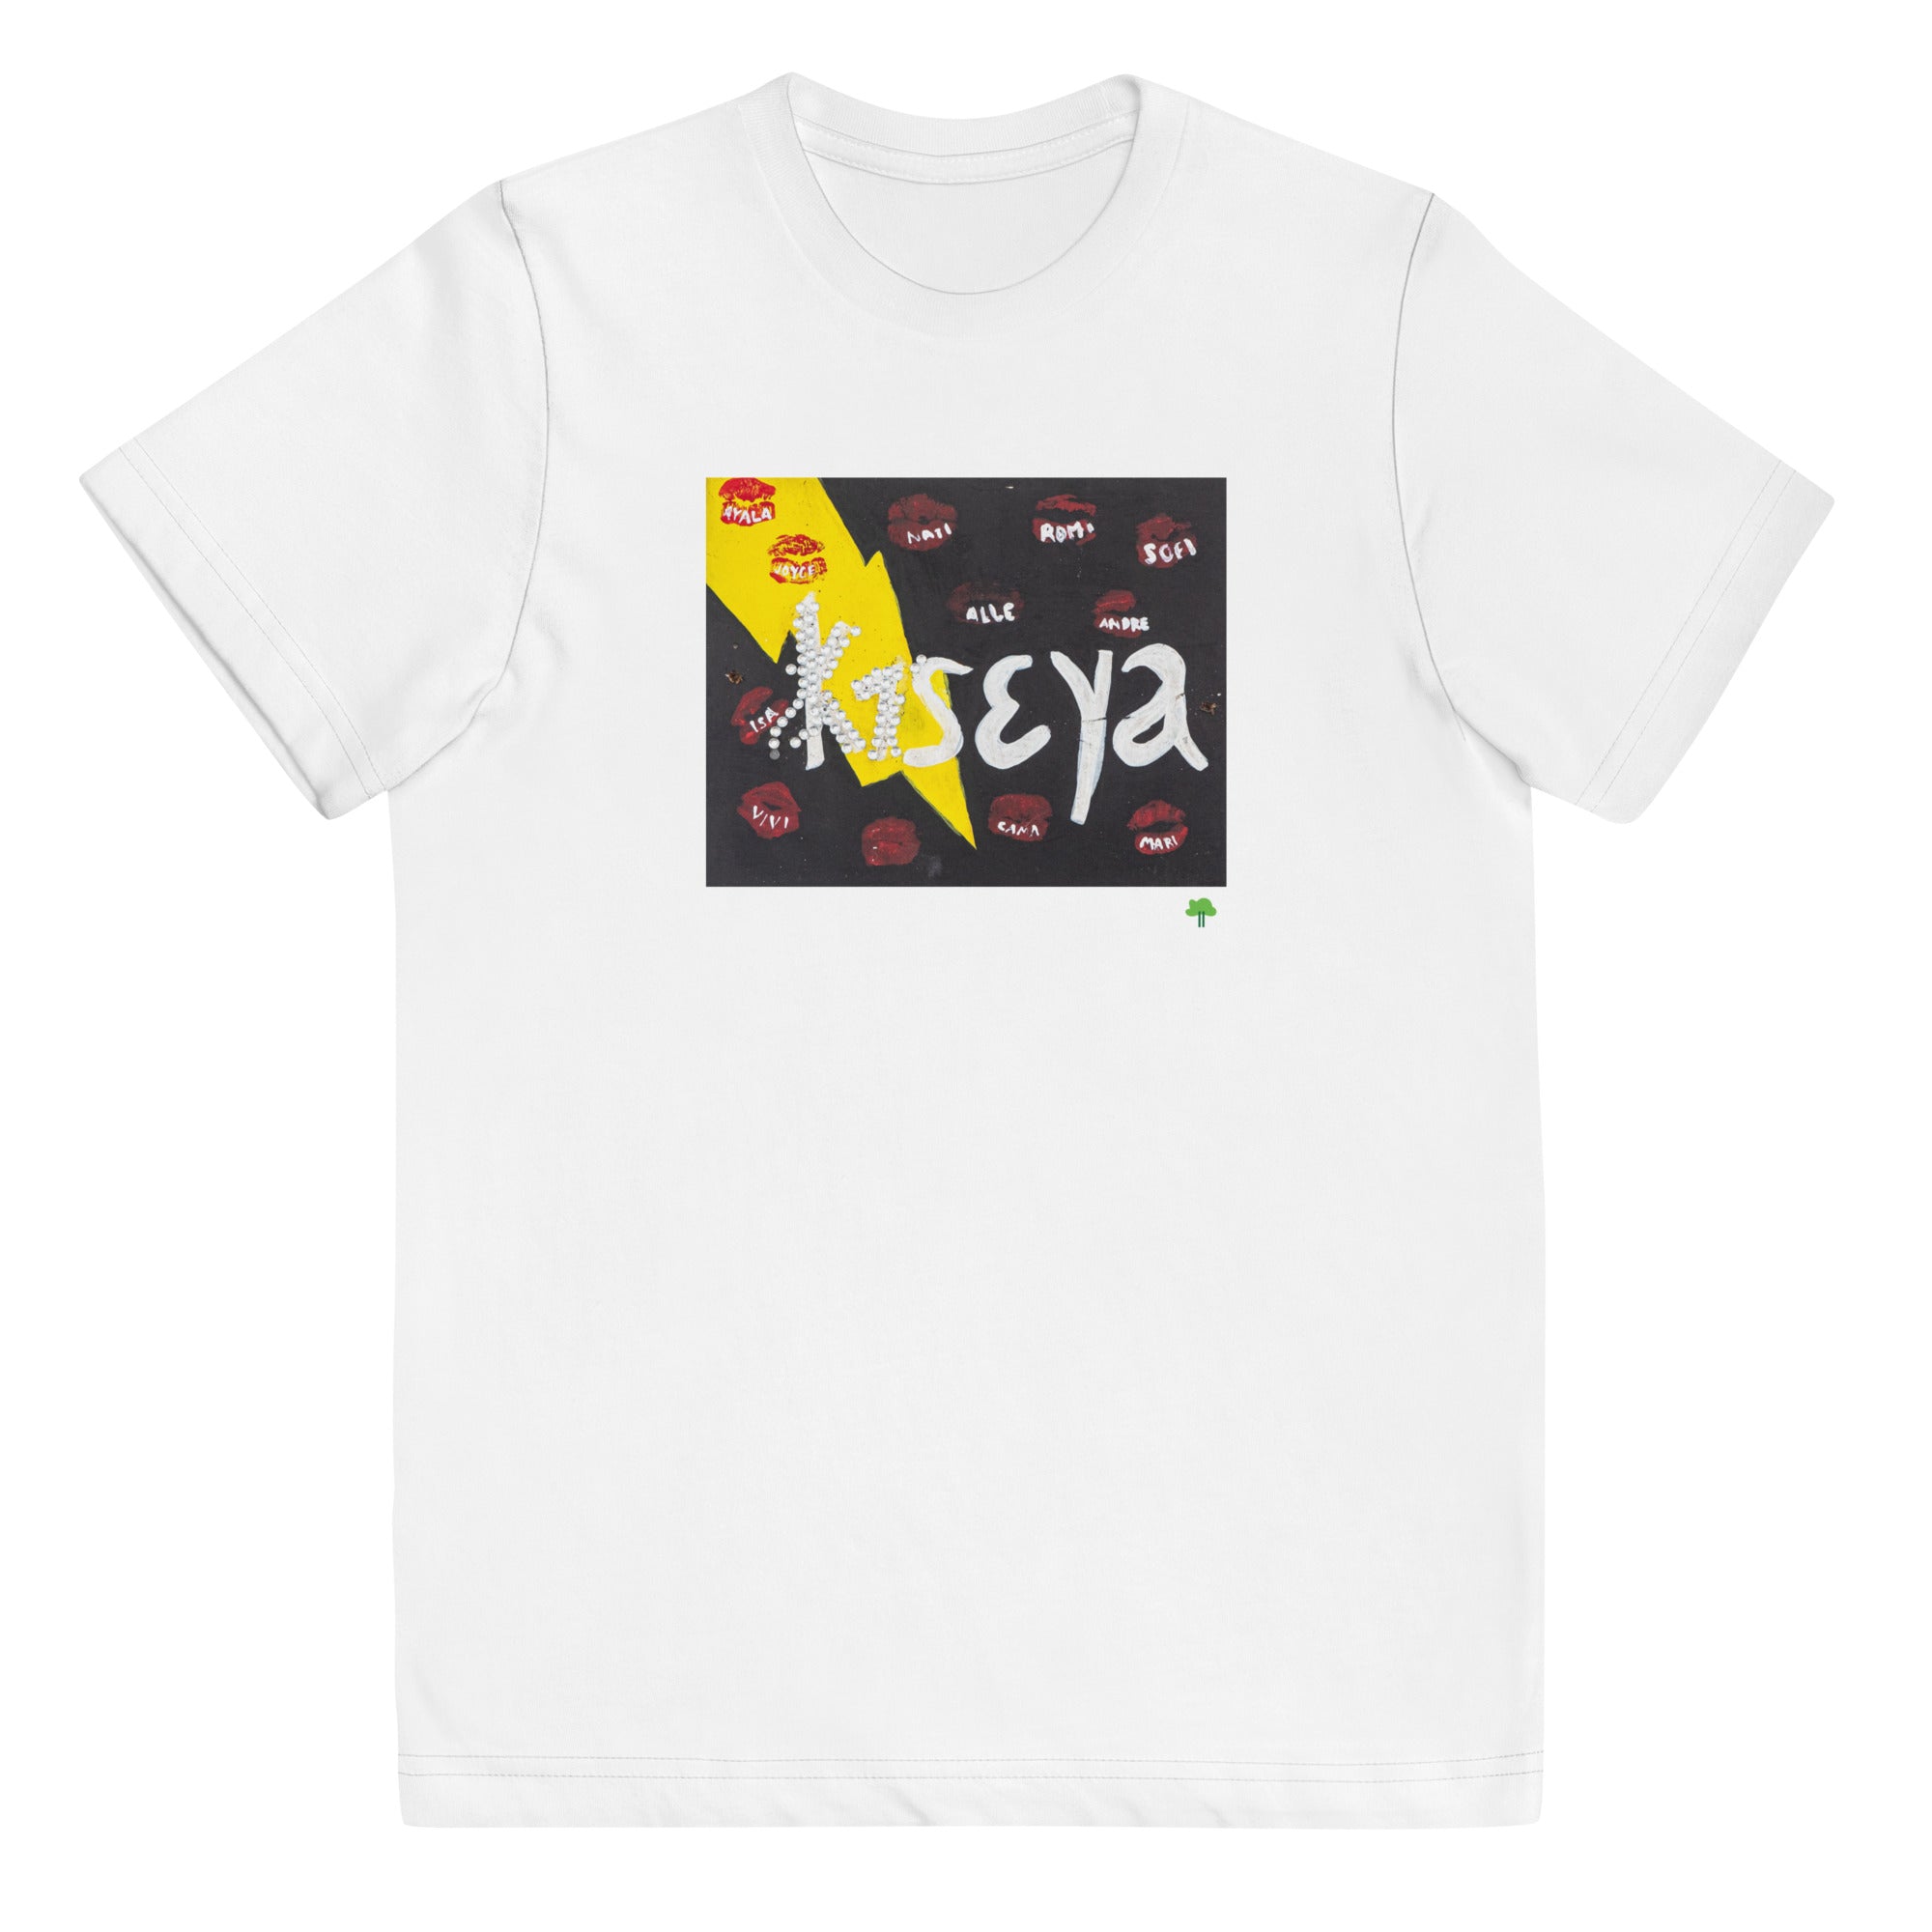 II Temp - Sabana - K7 | Youth jersey t-shirt